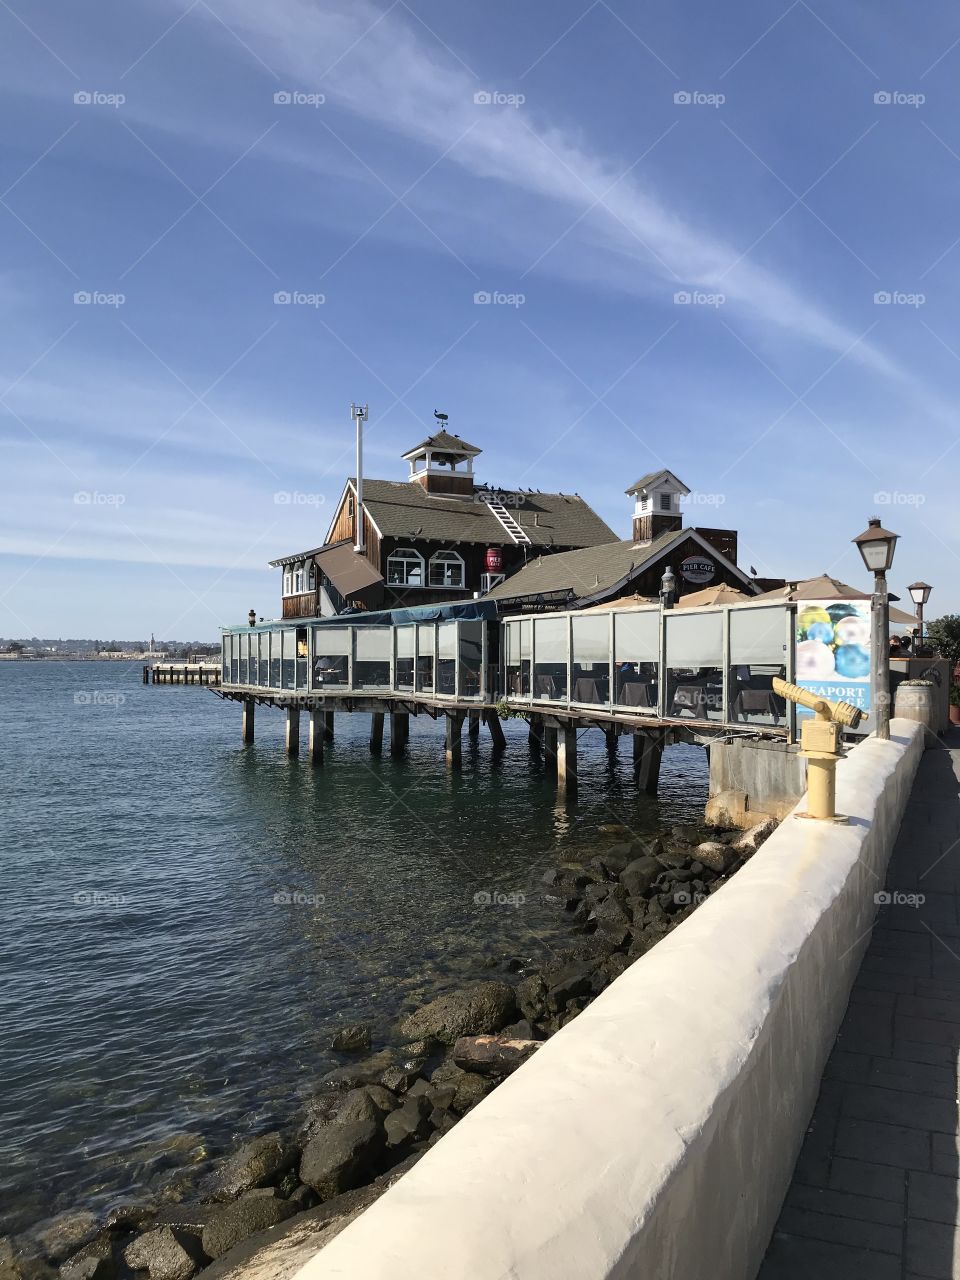 Pier Cafe